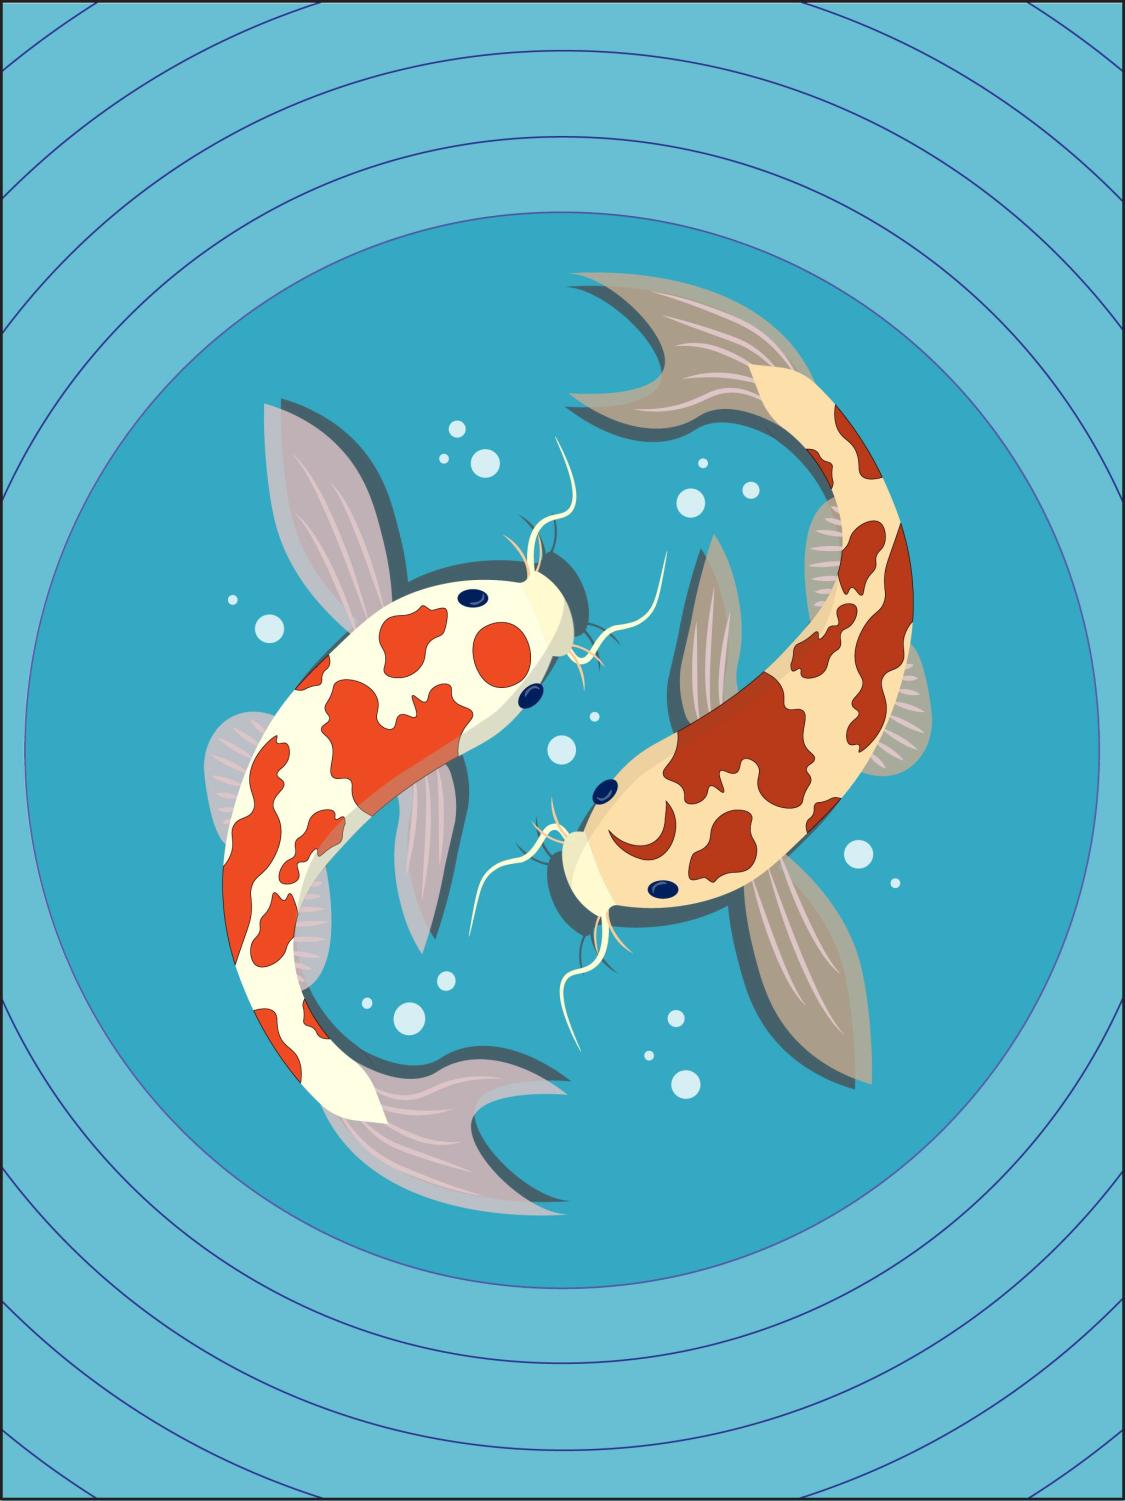 11649 Koi Fish Wallpaper Images Stock Photos  Vectors  Shutterstock